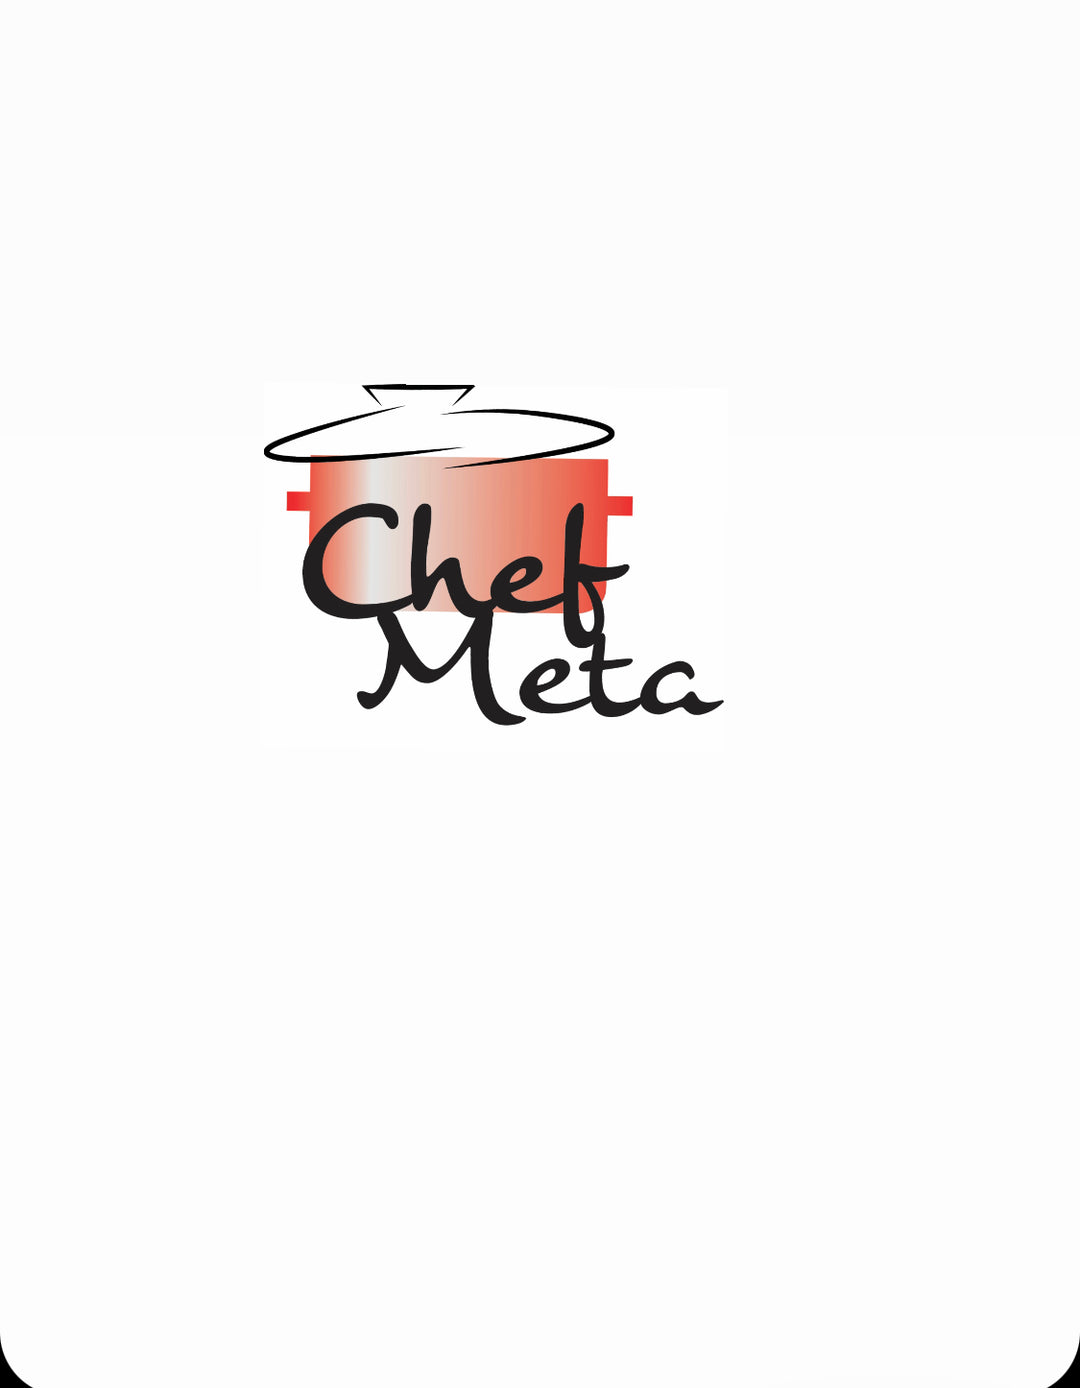 The Chef Meta Way!